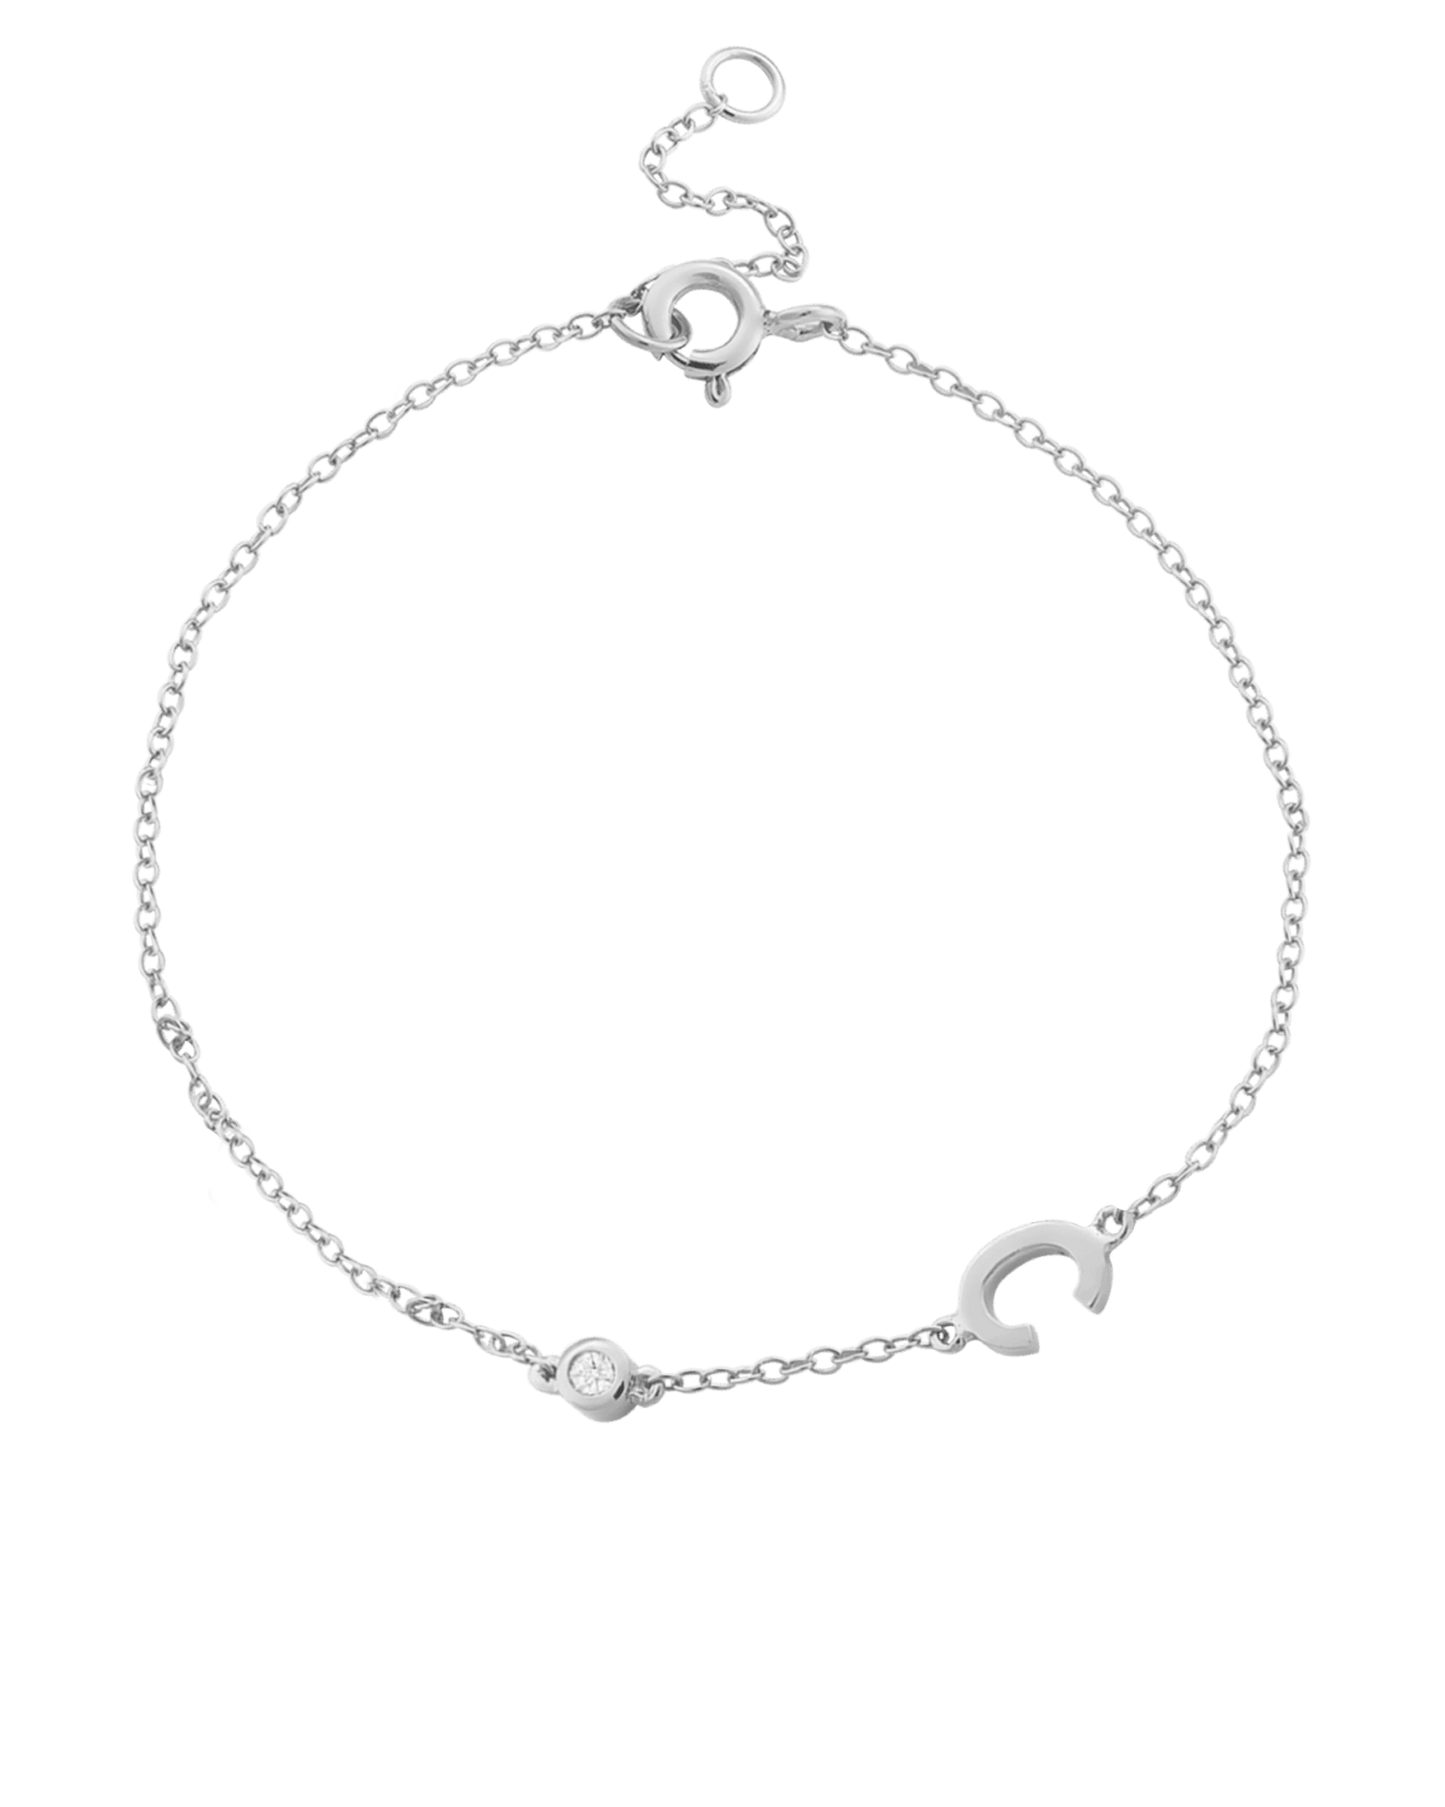 The Initial Bracelet with Diamonds - 925 Sterling Silver Bracelets magal-dev 1 Initial + 1 Diamond 6"-7" (S-M wrist 